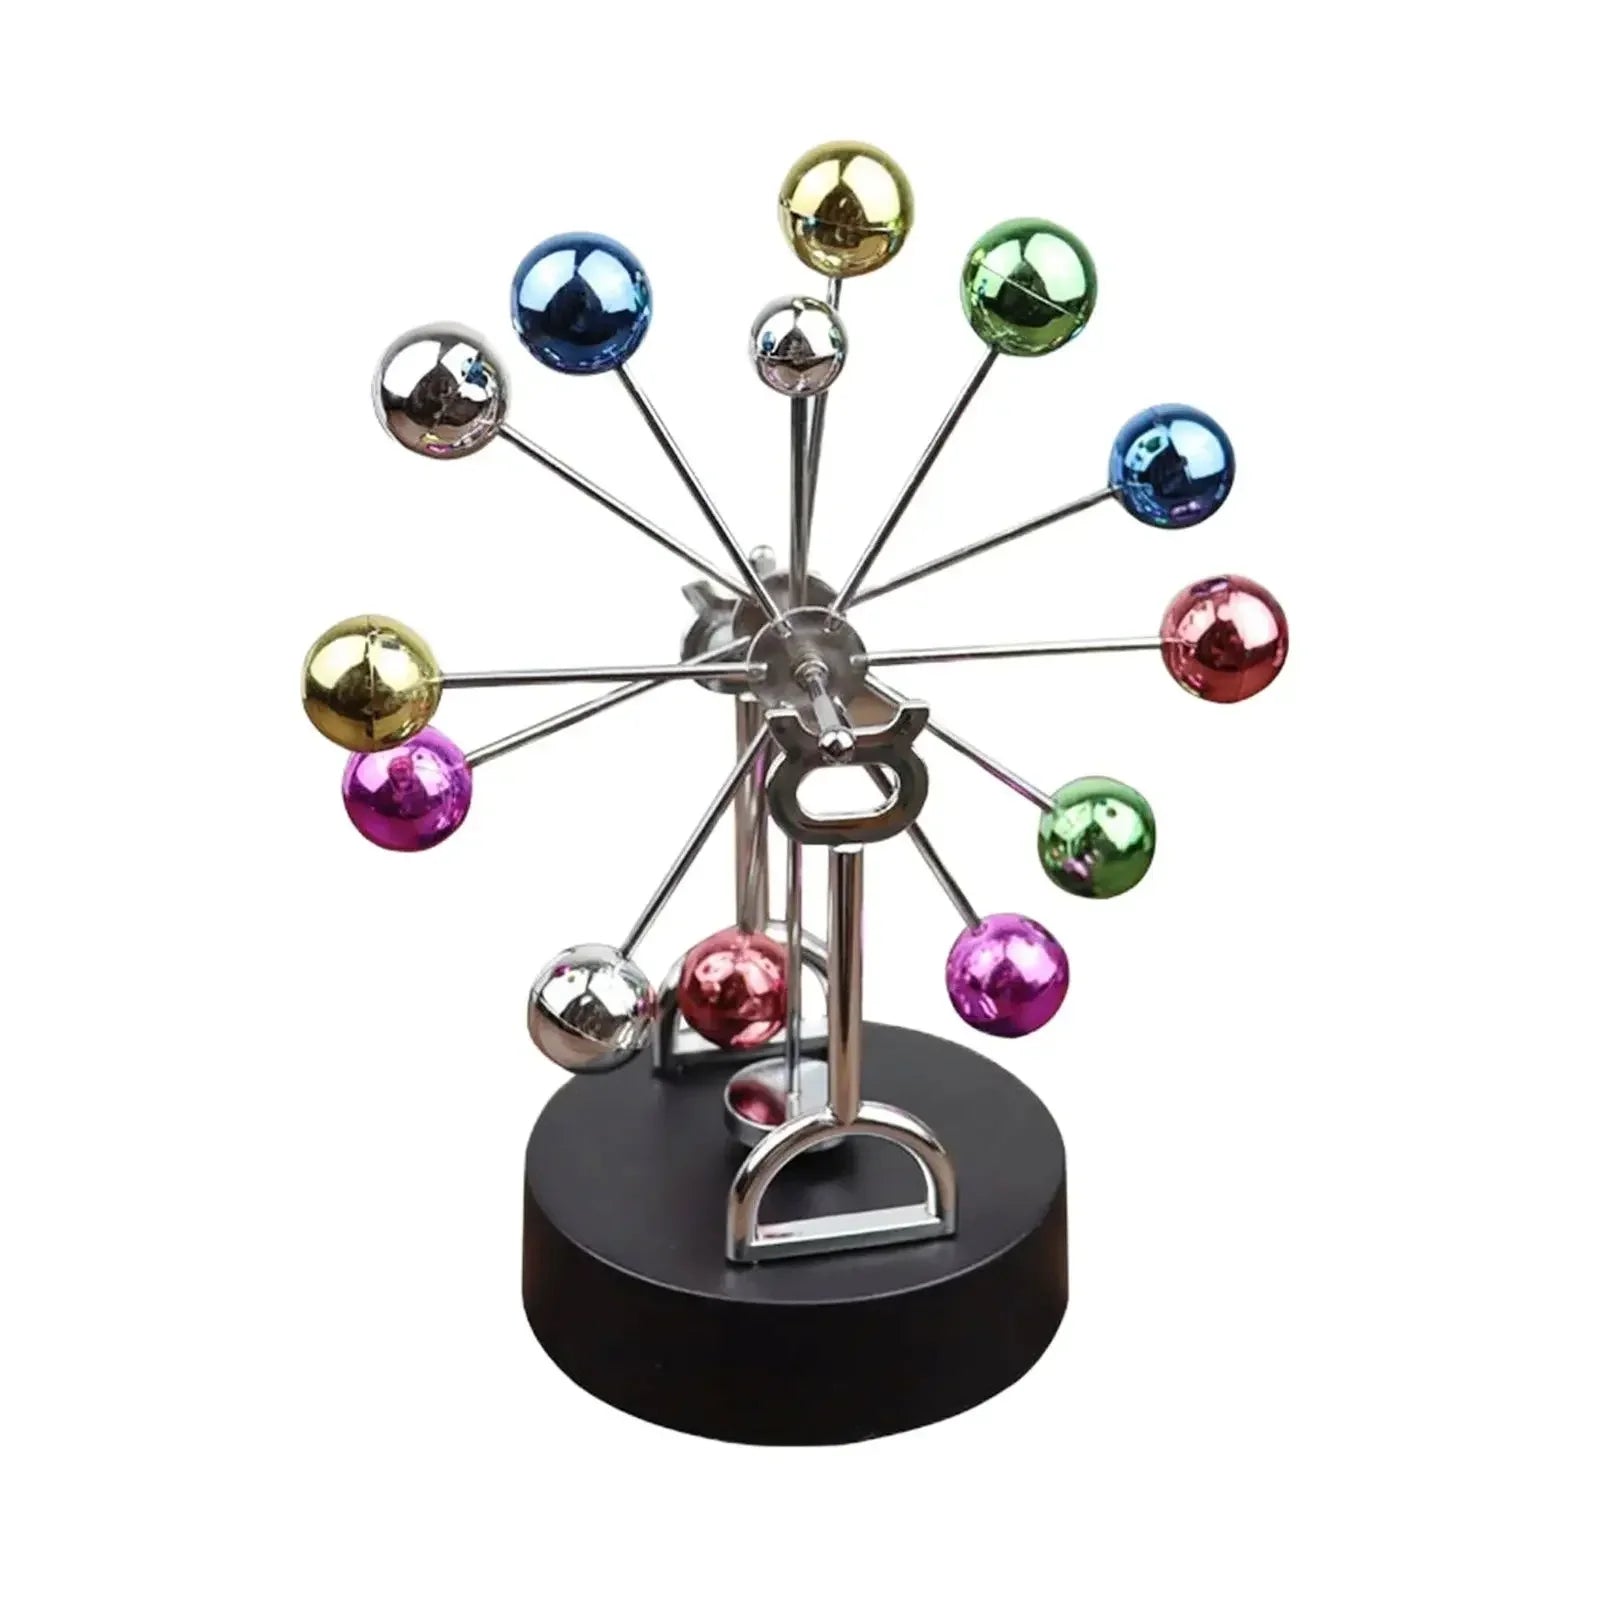 New Miniature Ferris Wheel Perpetual Motion Newton Pendulum Eternal Celestial Model Magnetic Ornament for Home Decoration